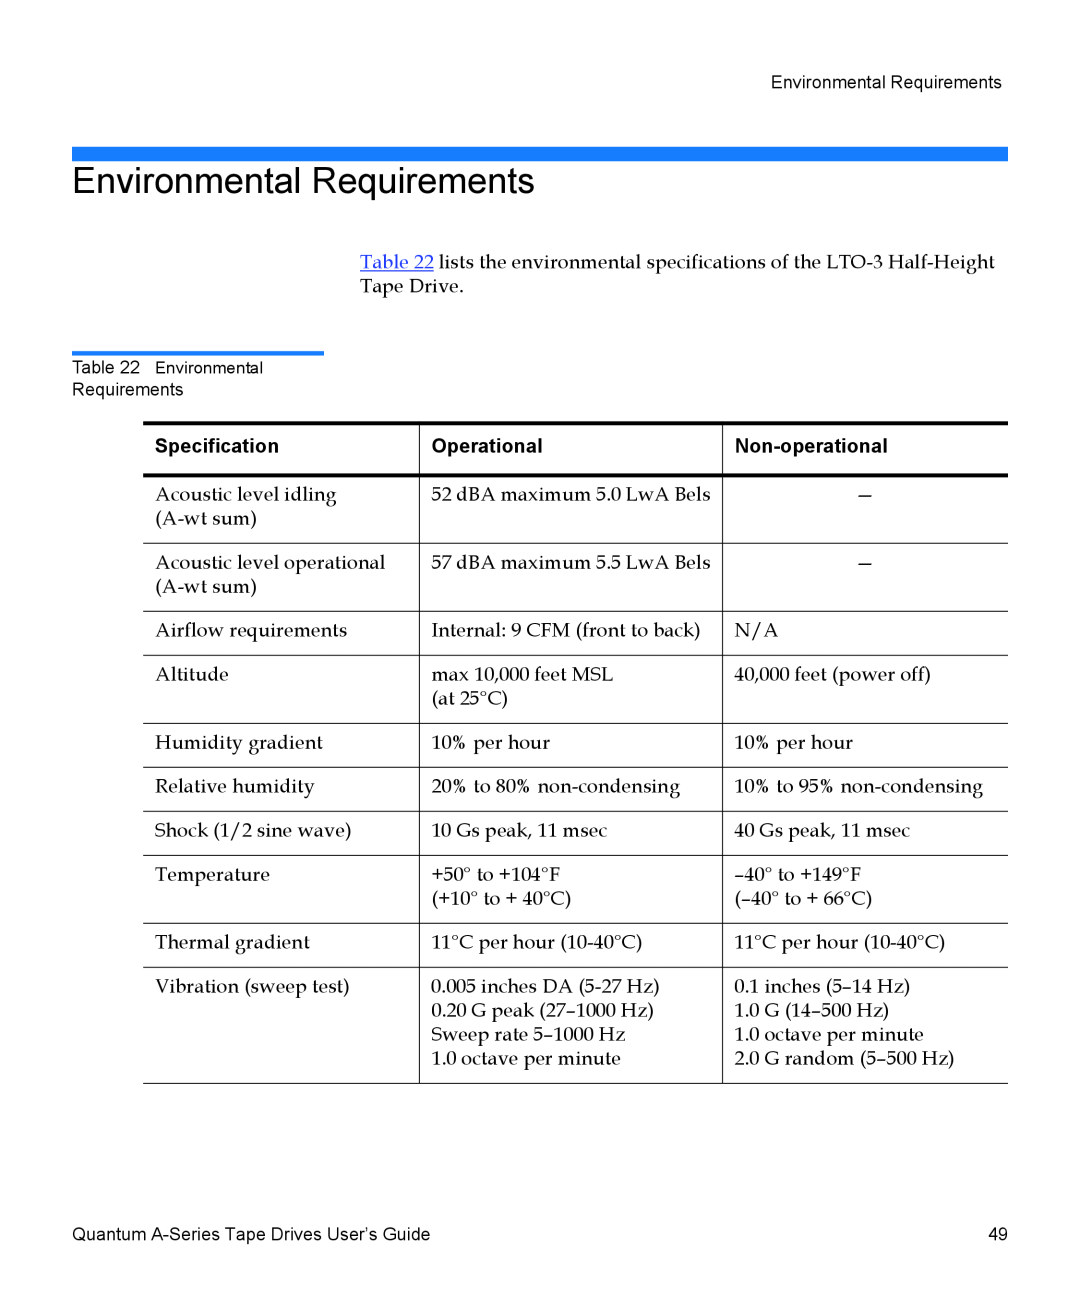 Quantum A-Series manual Environmental Requirements 